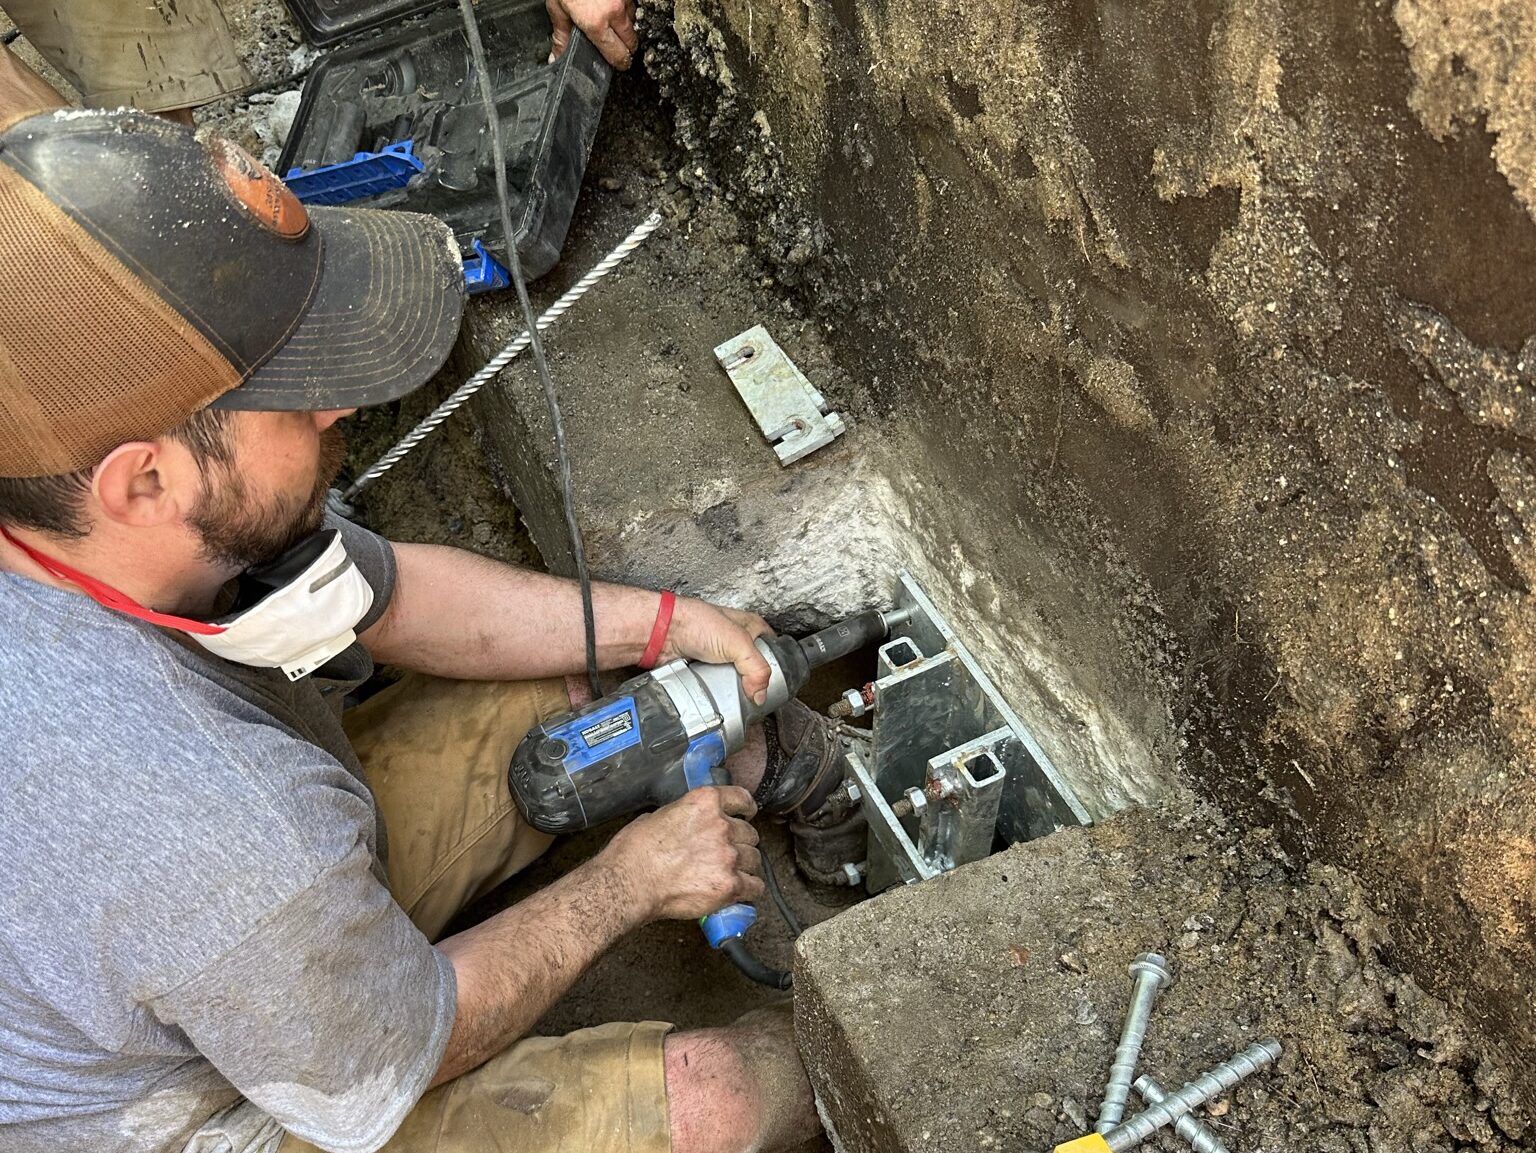 A plumber repairing a sump pump in a flooded basement